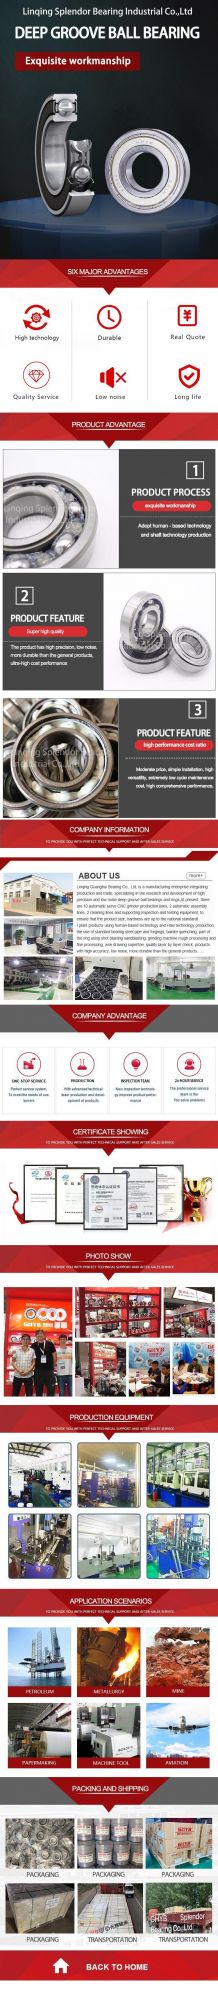 China Factory Distributor Supplier of Deep Groove Ball Bearings for Motors, Compressors, Alternators 6210-2rz/P6/Z2V2